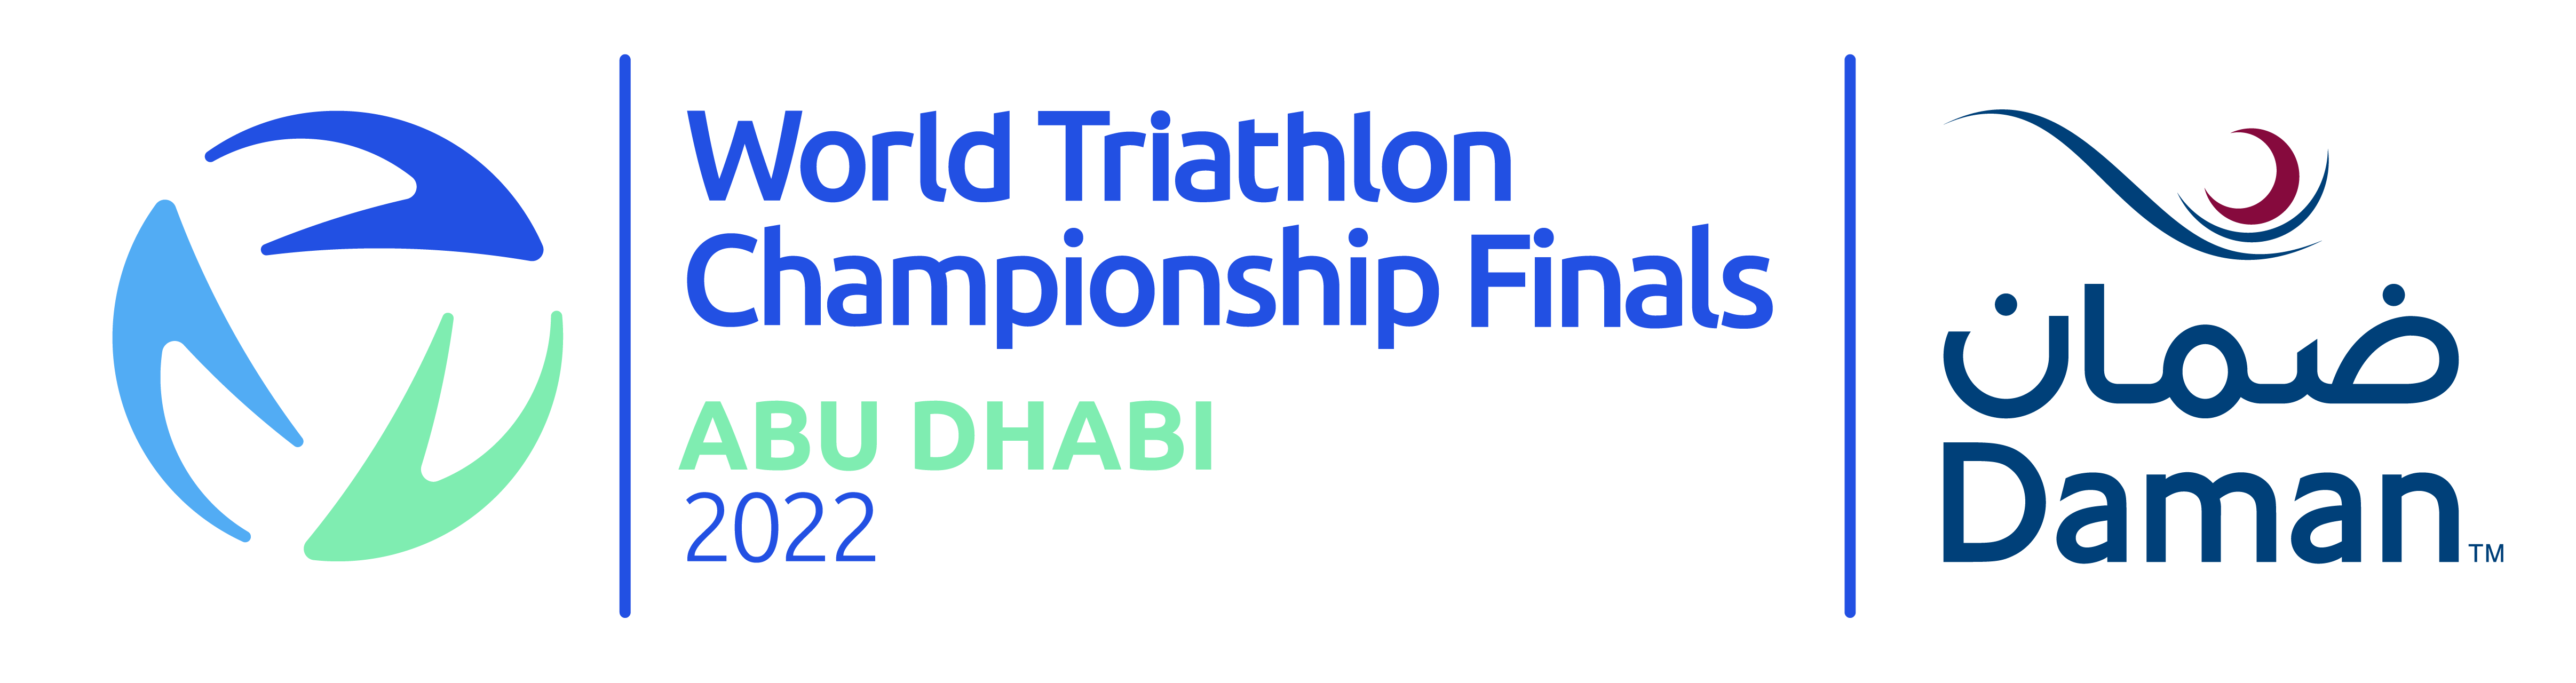 2022 World Triathlon Championship Finals Abu Dhabi logo